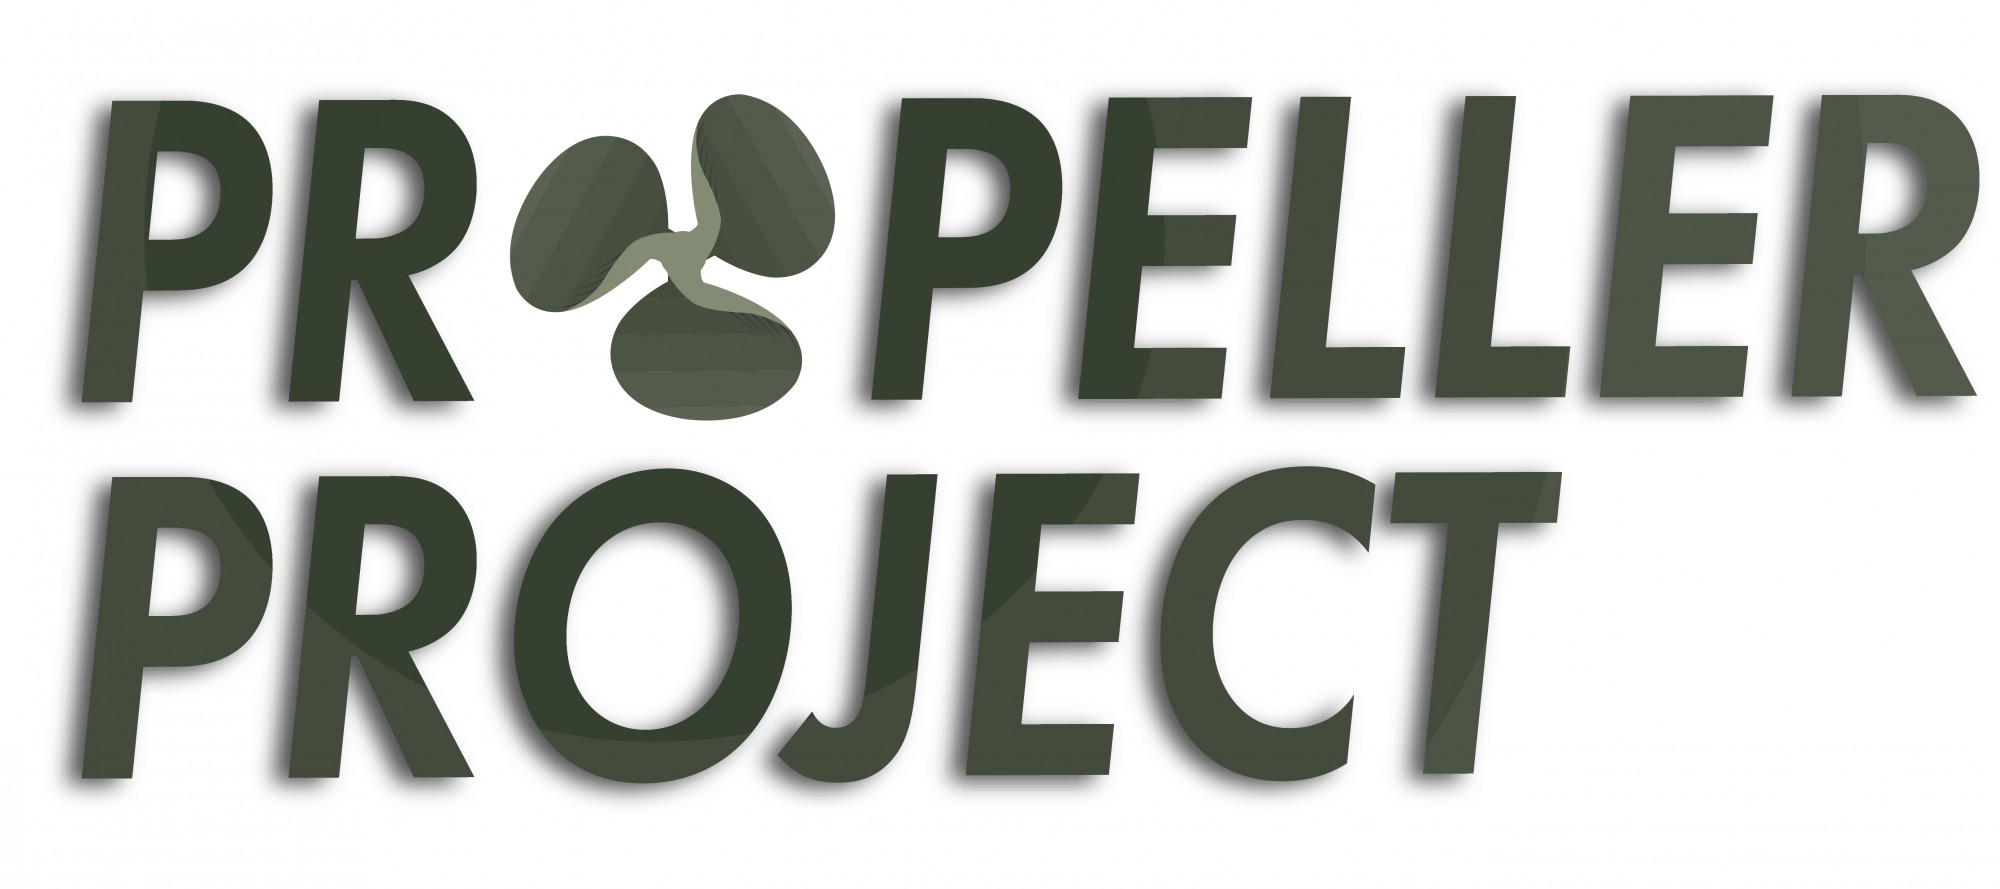 Propeller Project in words